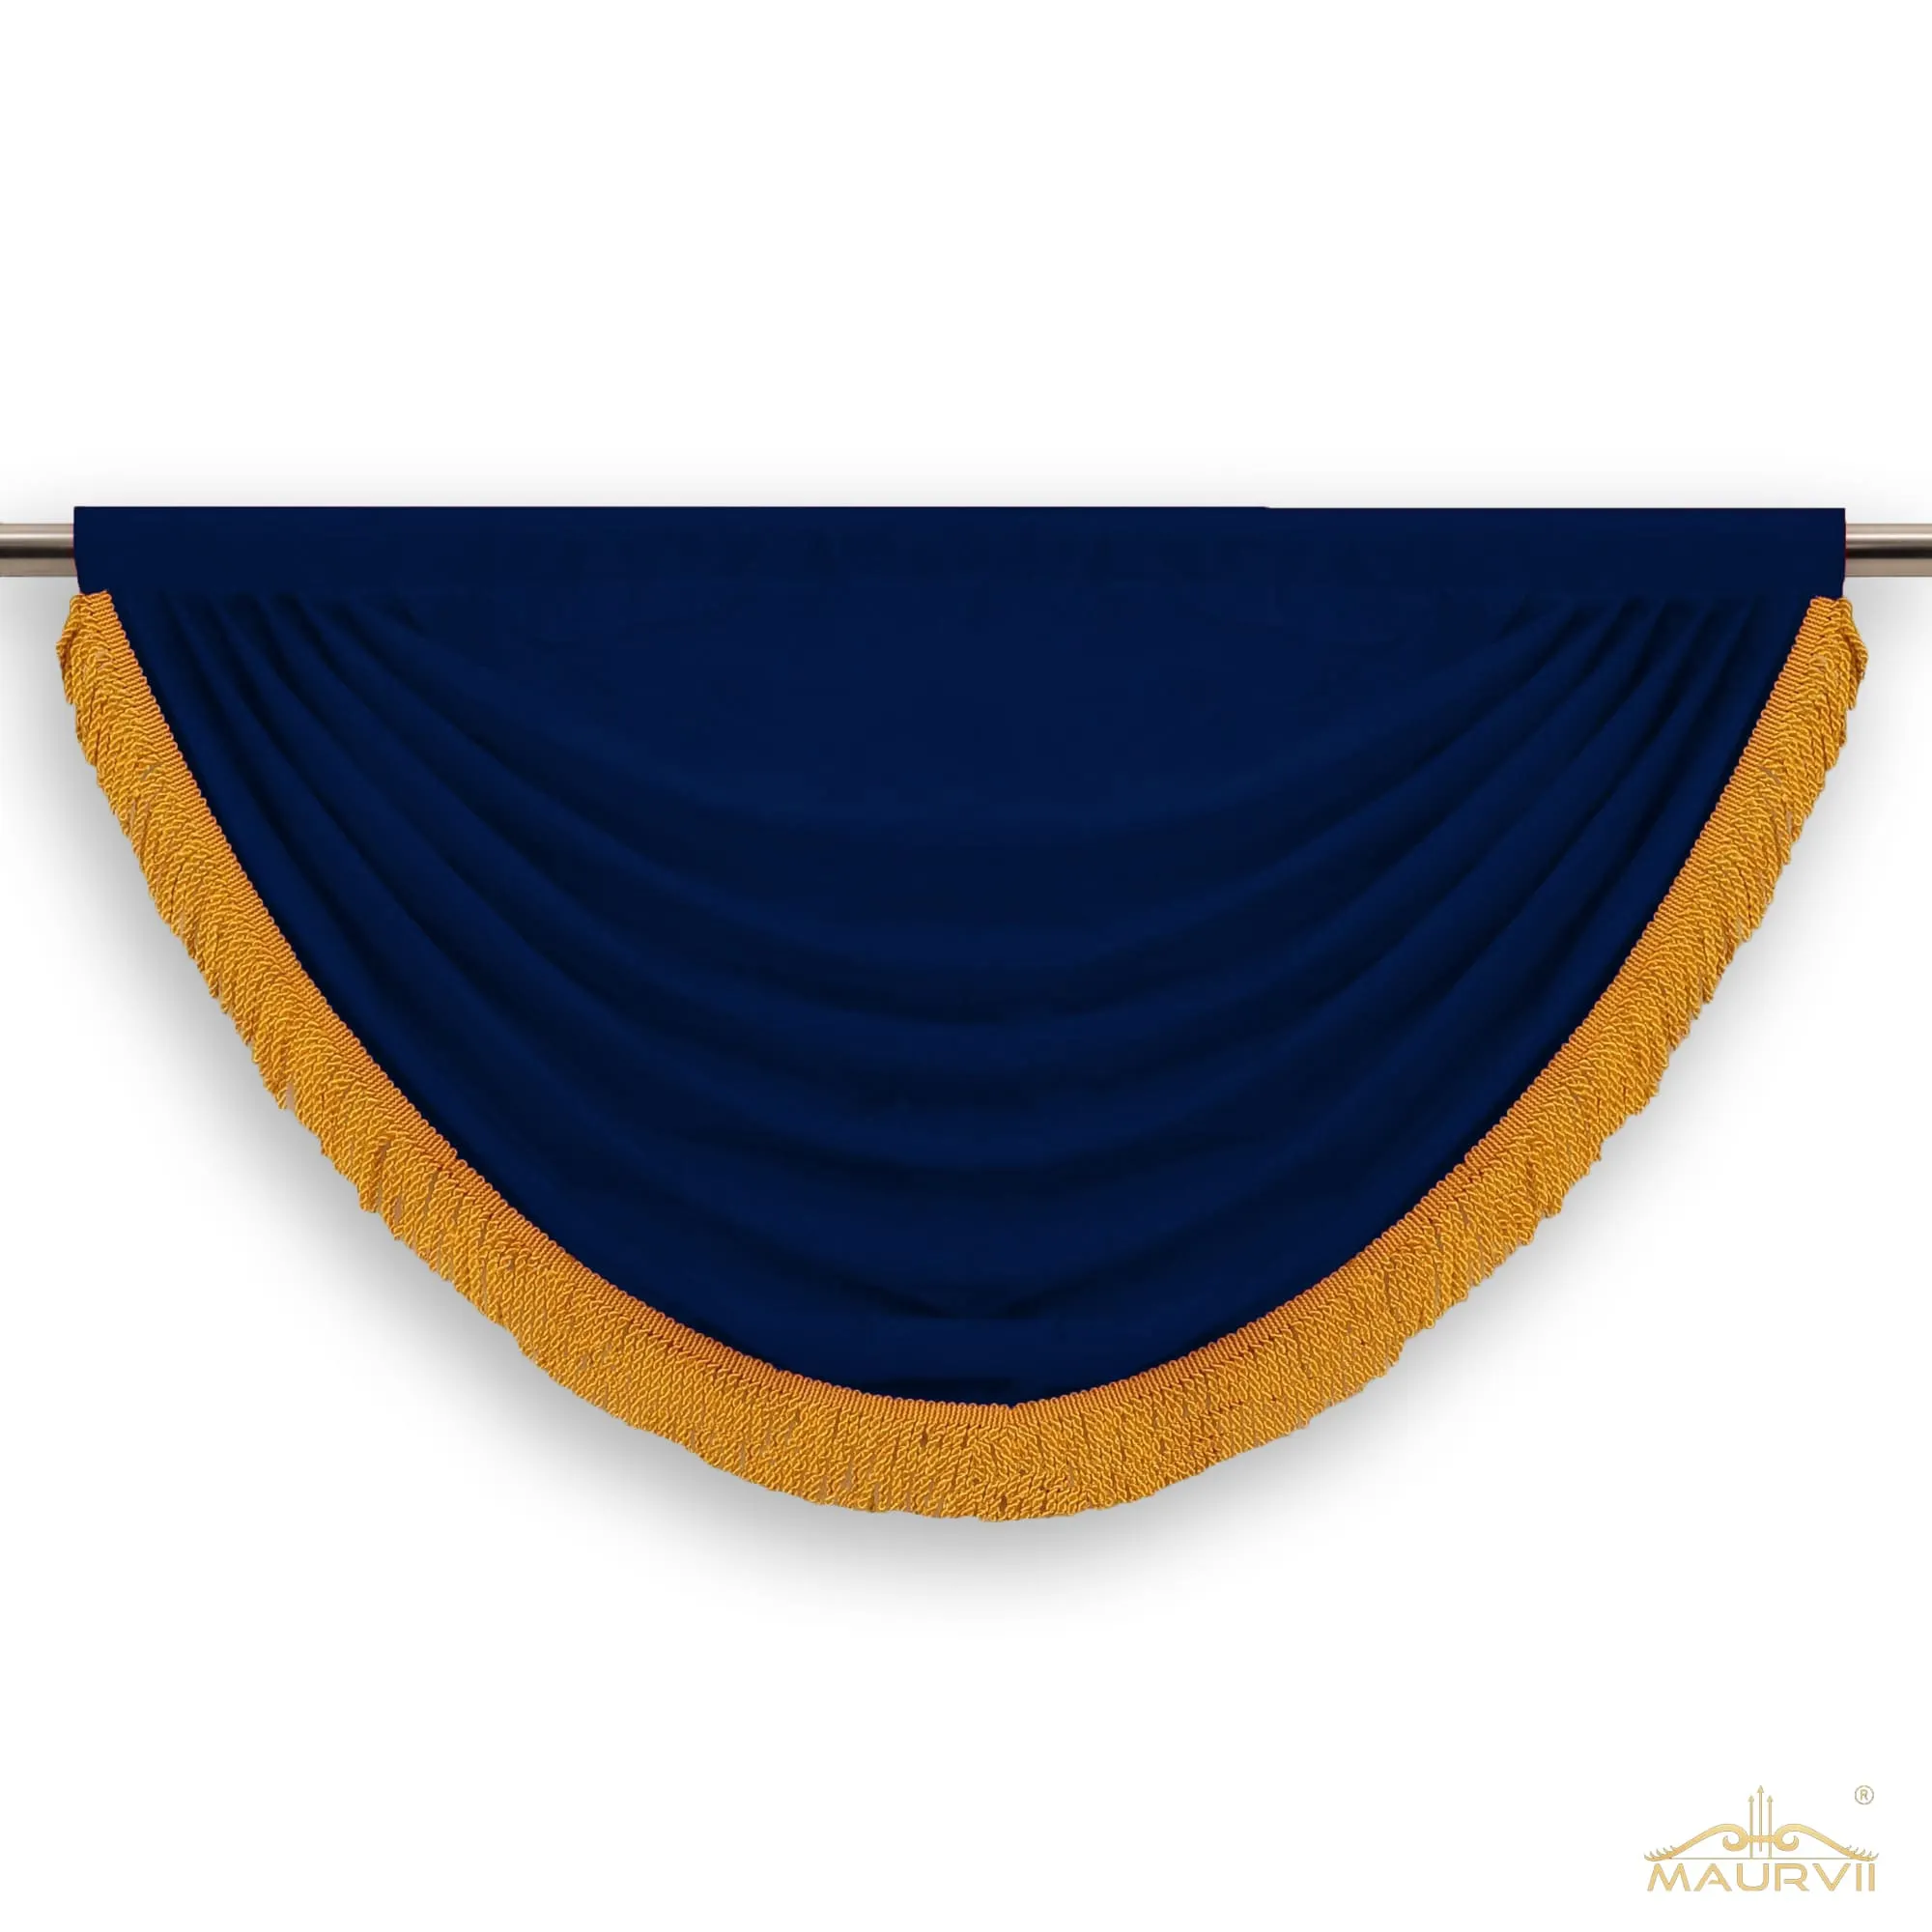 Navy blue valance curtains